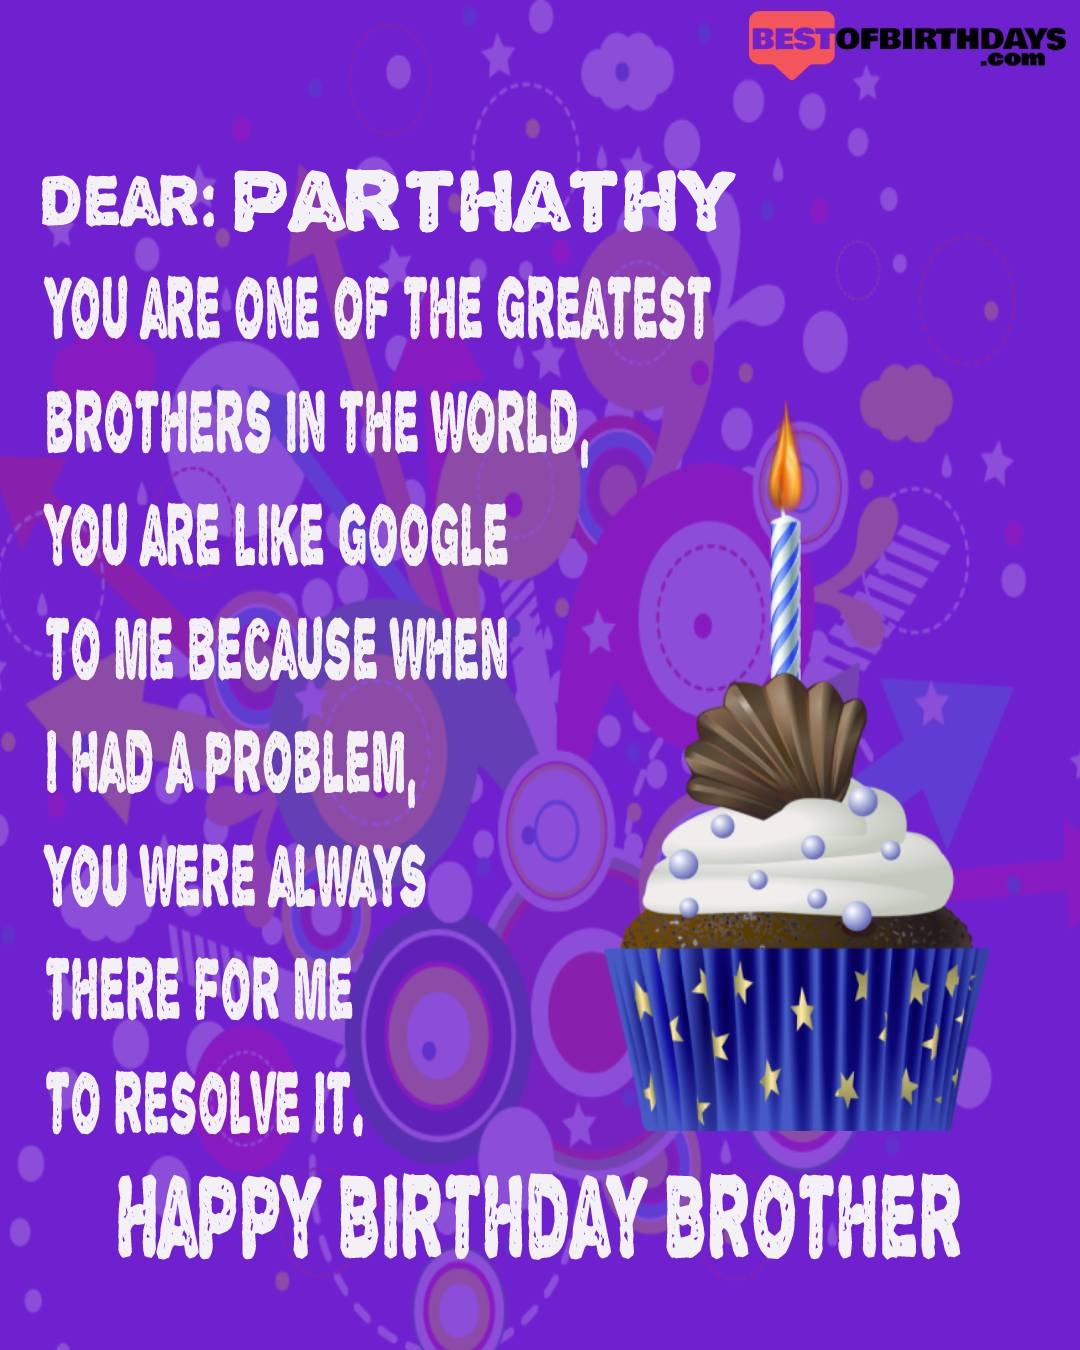 Happy birthday parthathy bhai brother bro